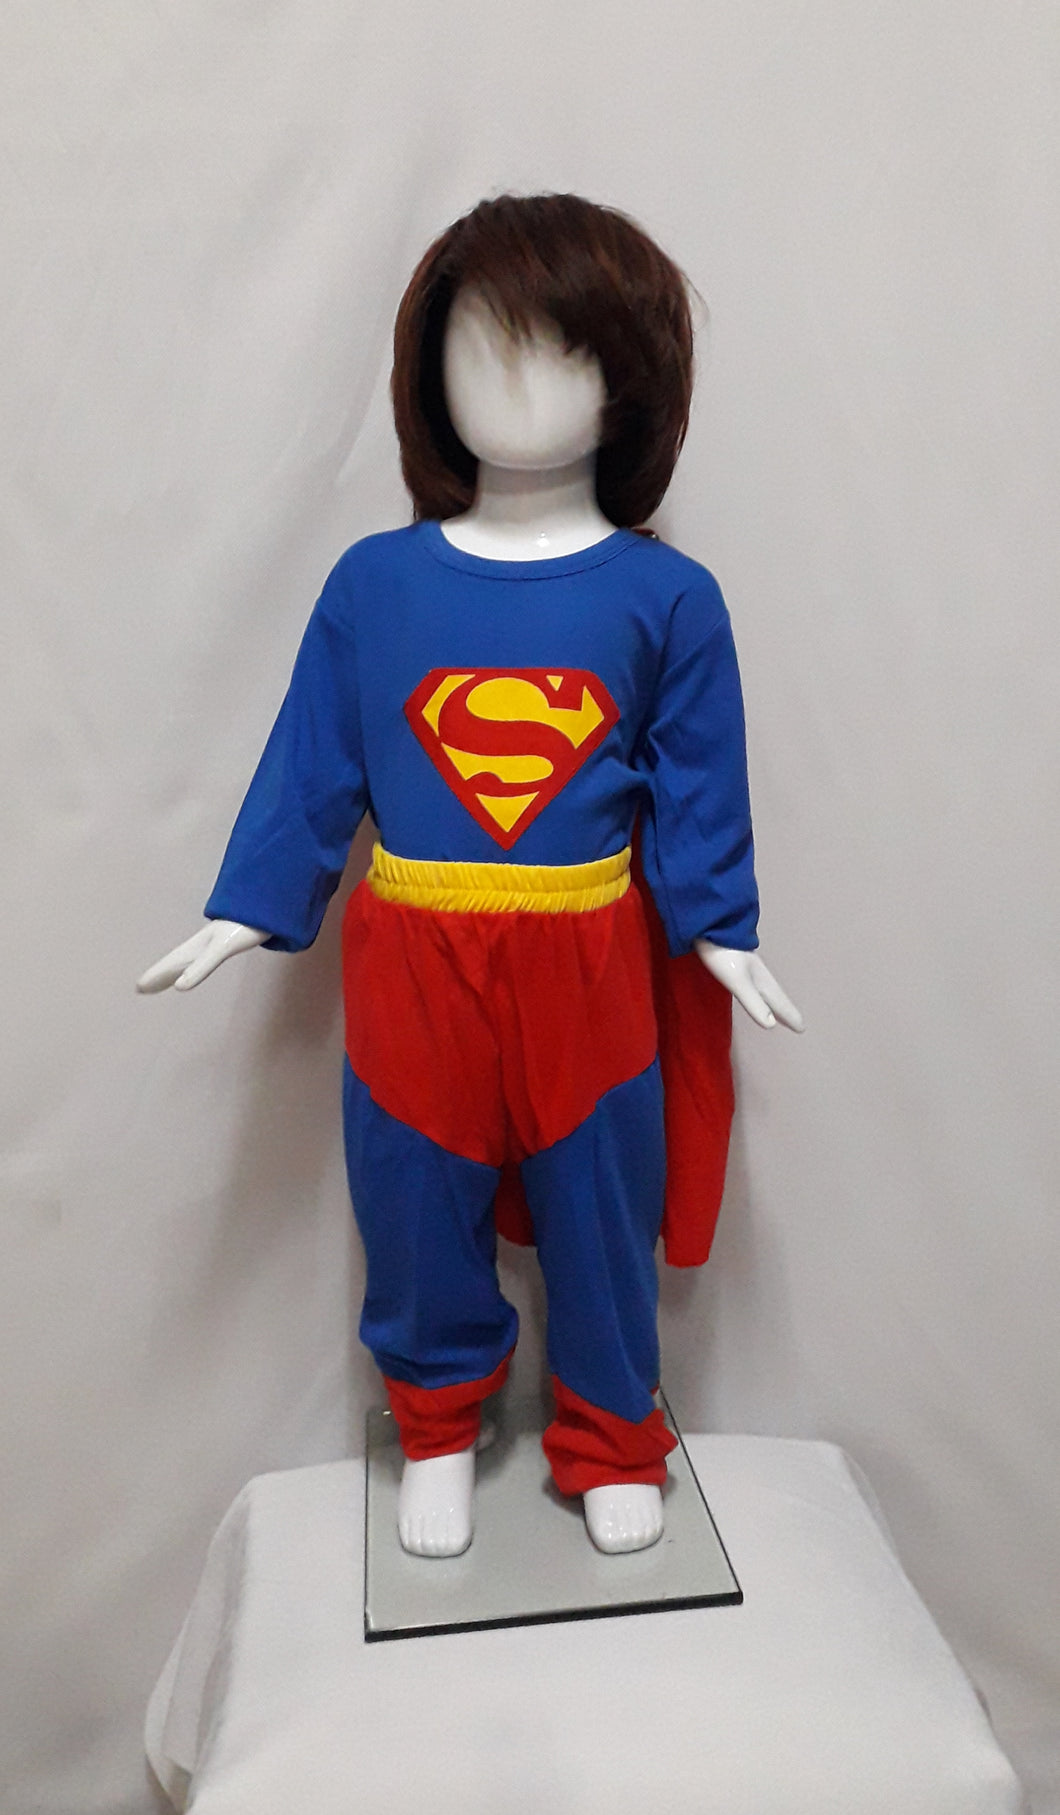 Superman costume for kids (4-6yo)